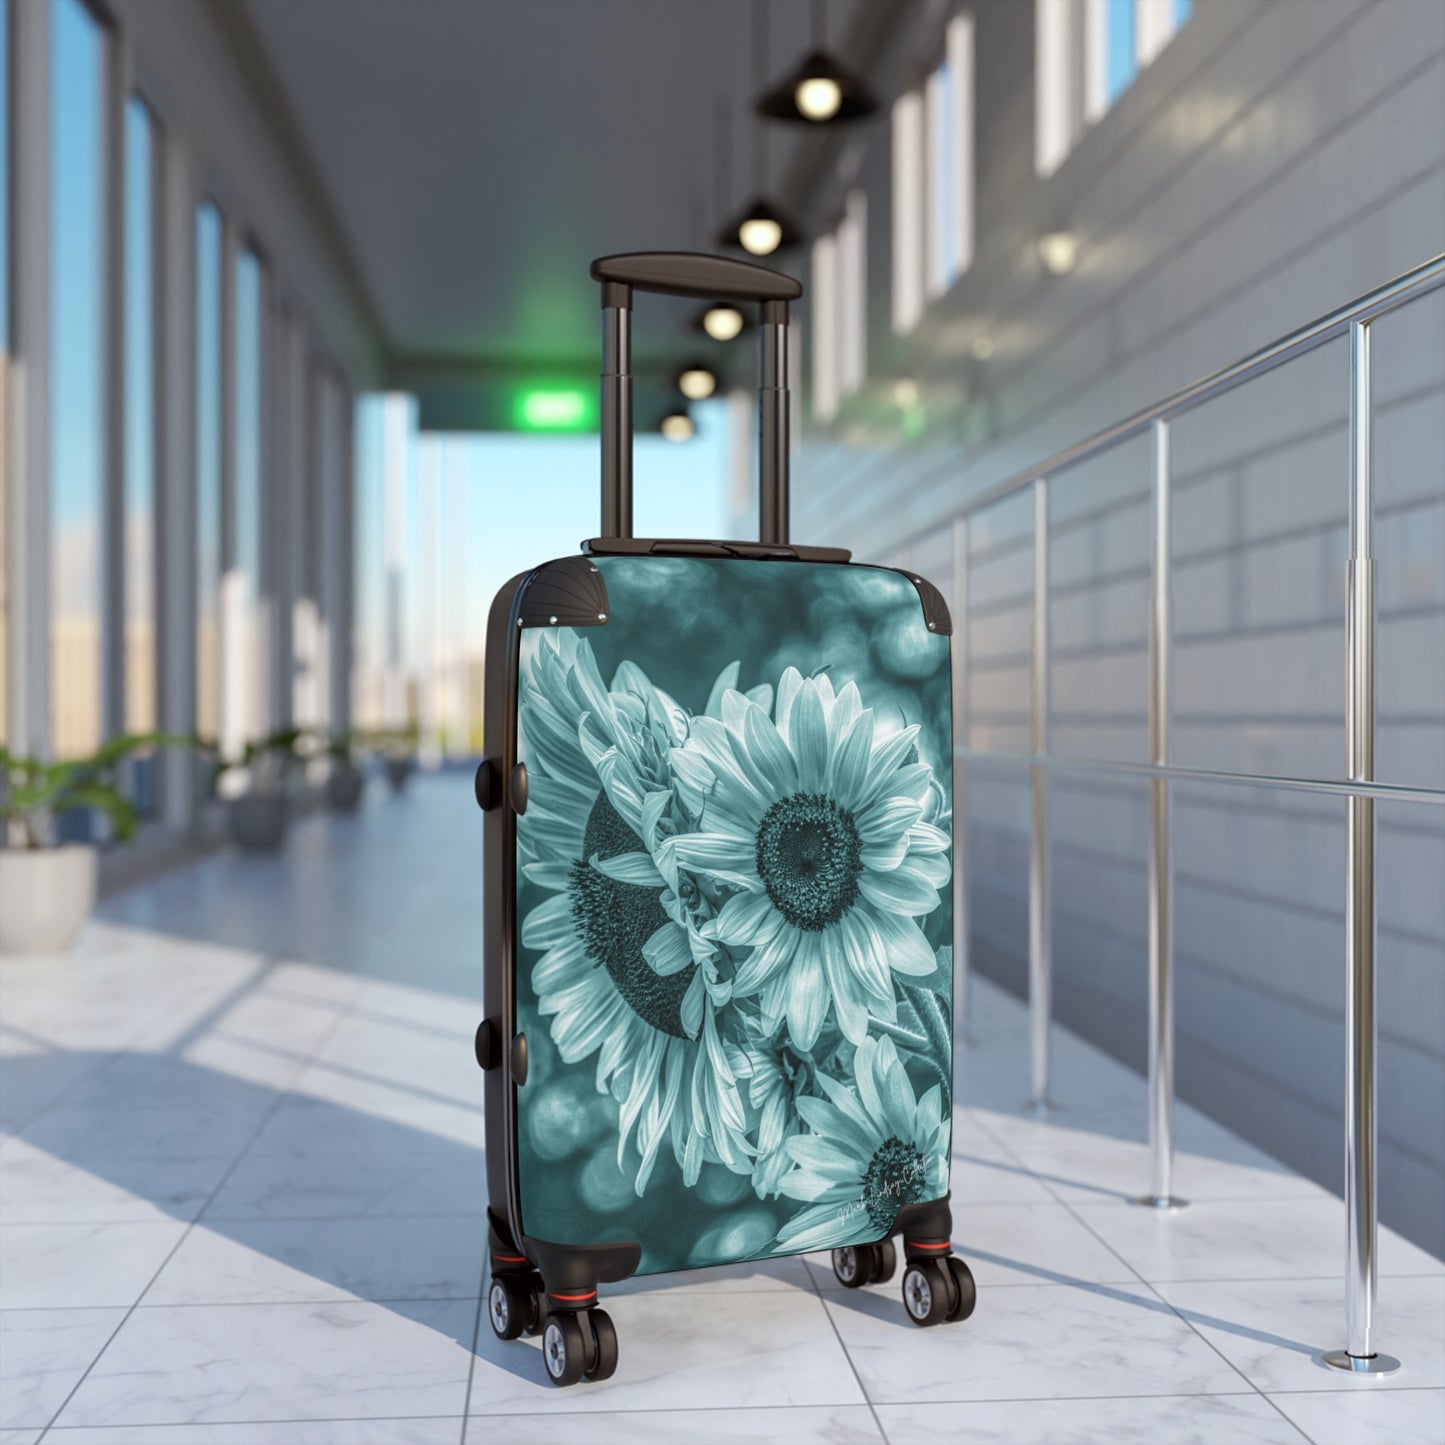 Sunflower Dreamy Tundra Custom Art Luggage